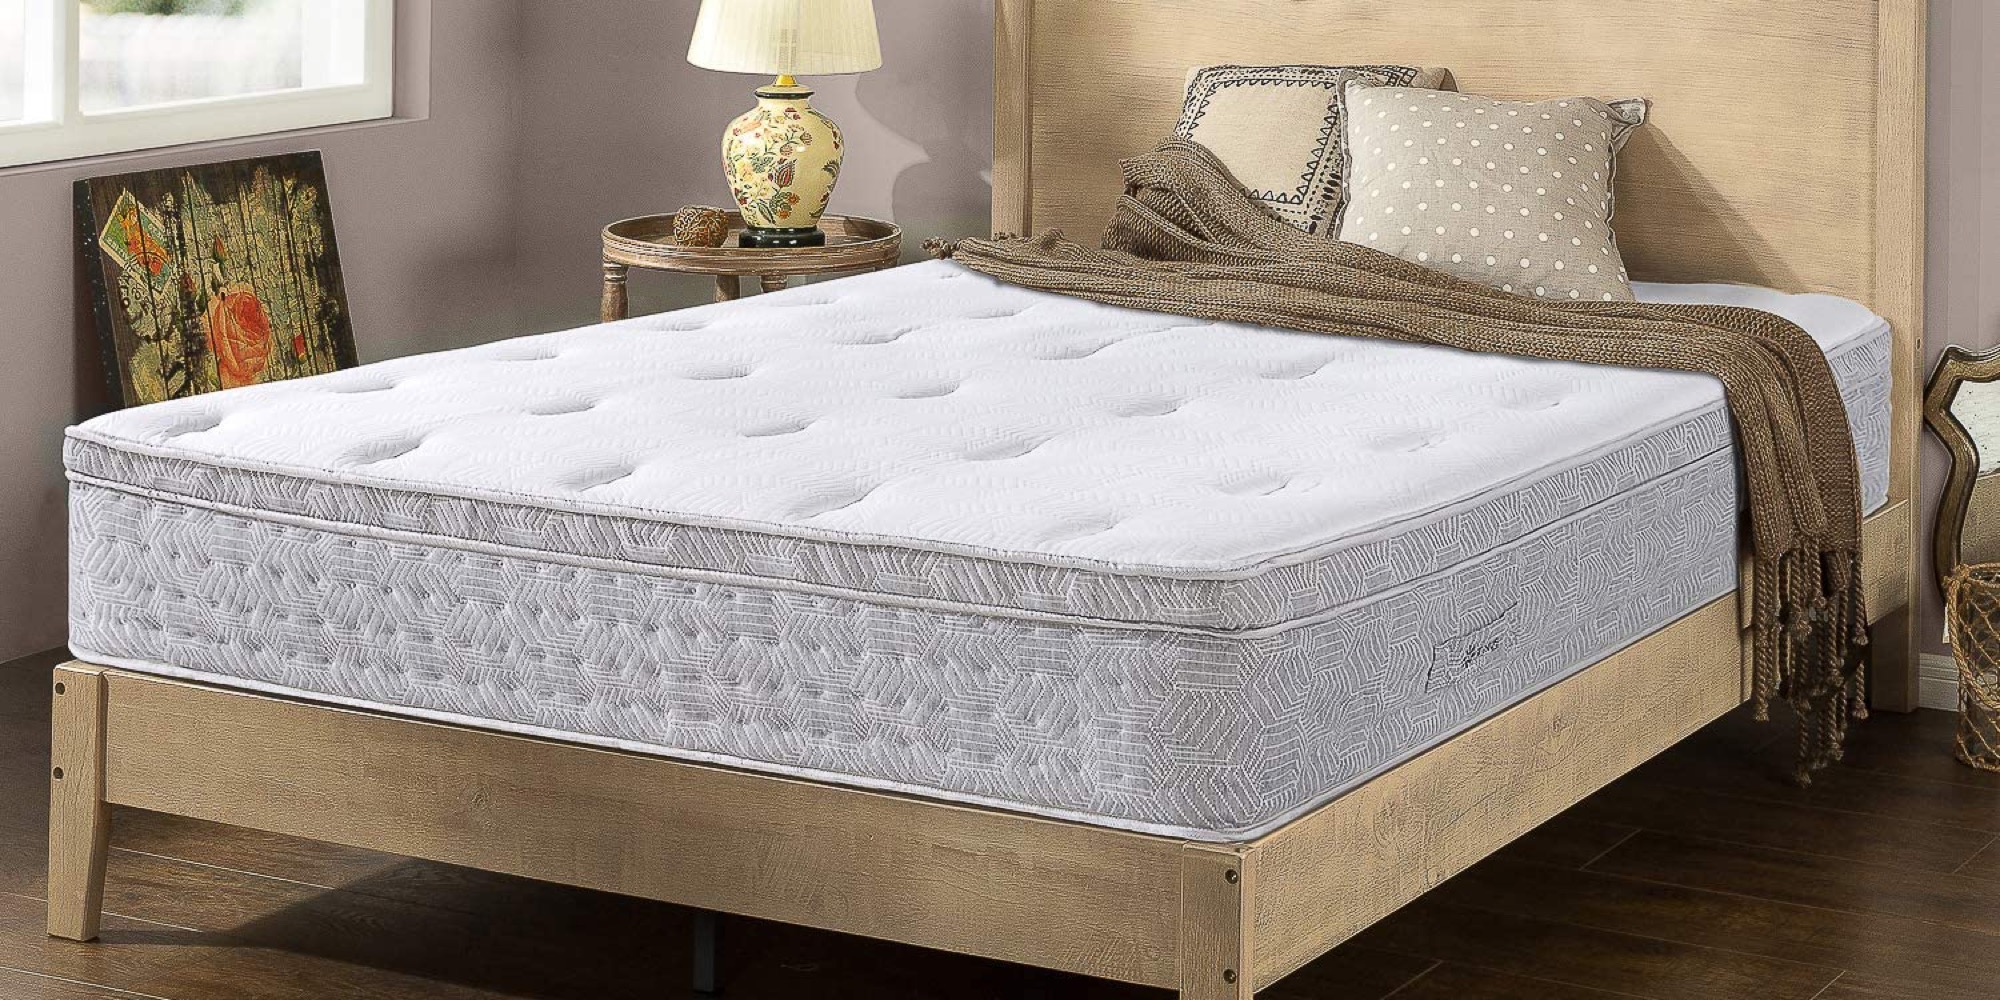 sheets to put on 12 inch zinus mattress